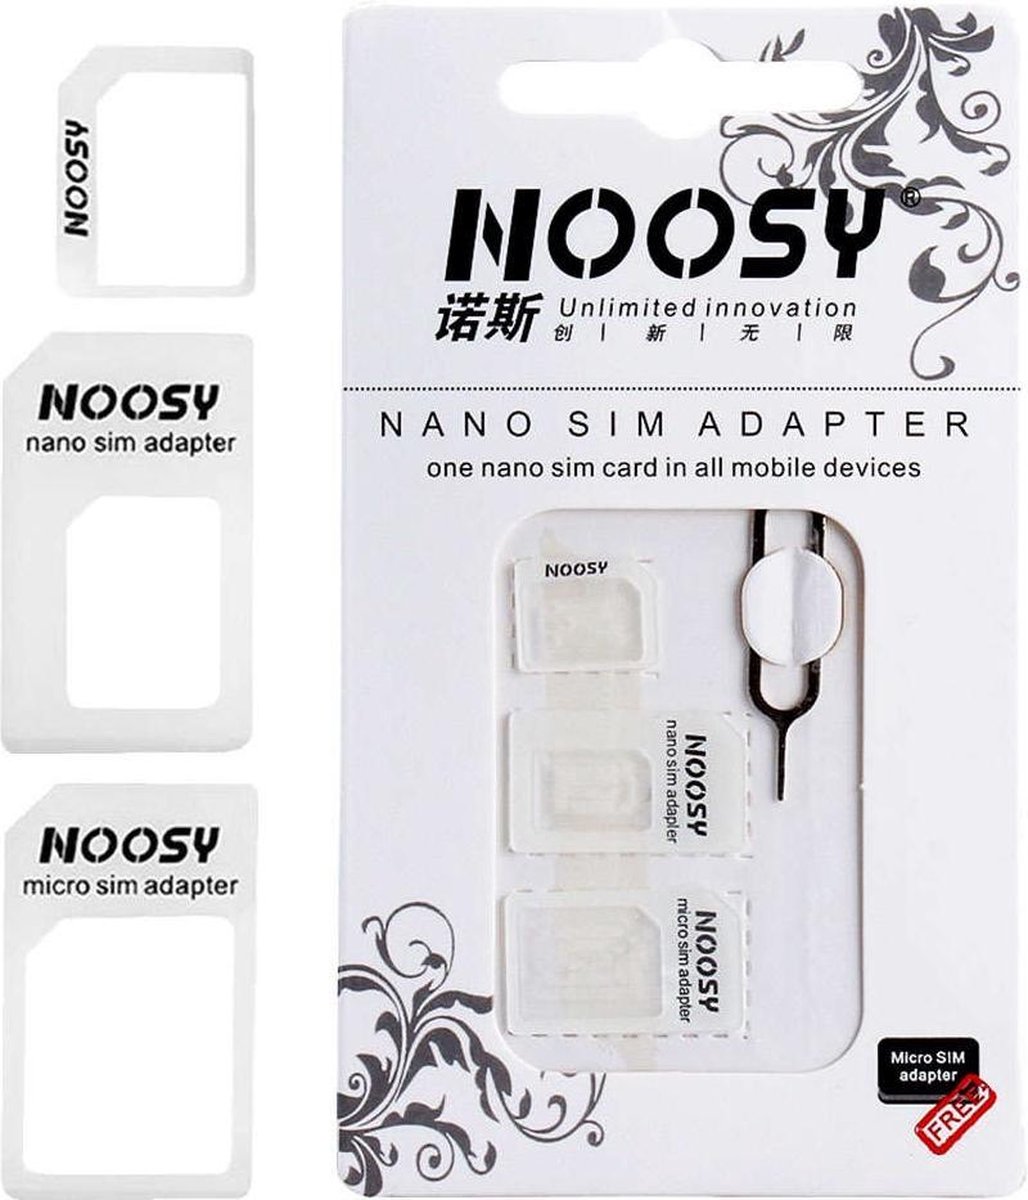 Noosy Sim Card Adapter Kit White - Noosy